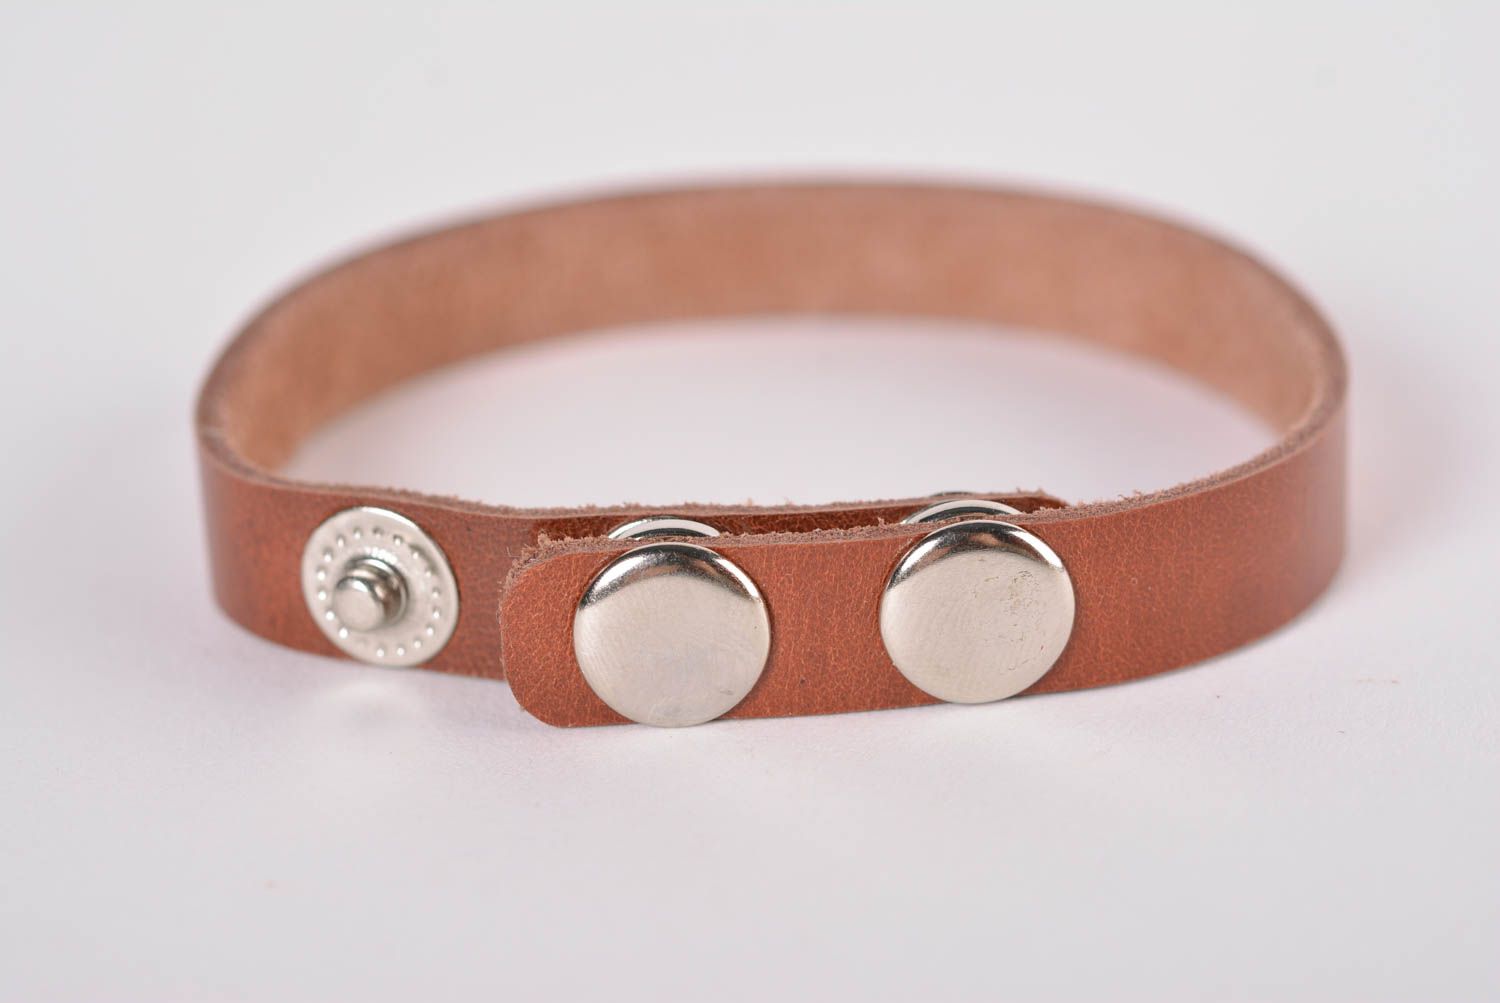 Unusual handmade leather bracelet fashion accessories unisex jewelry gift ideas photo 3